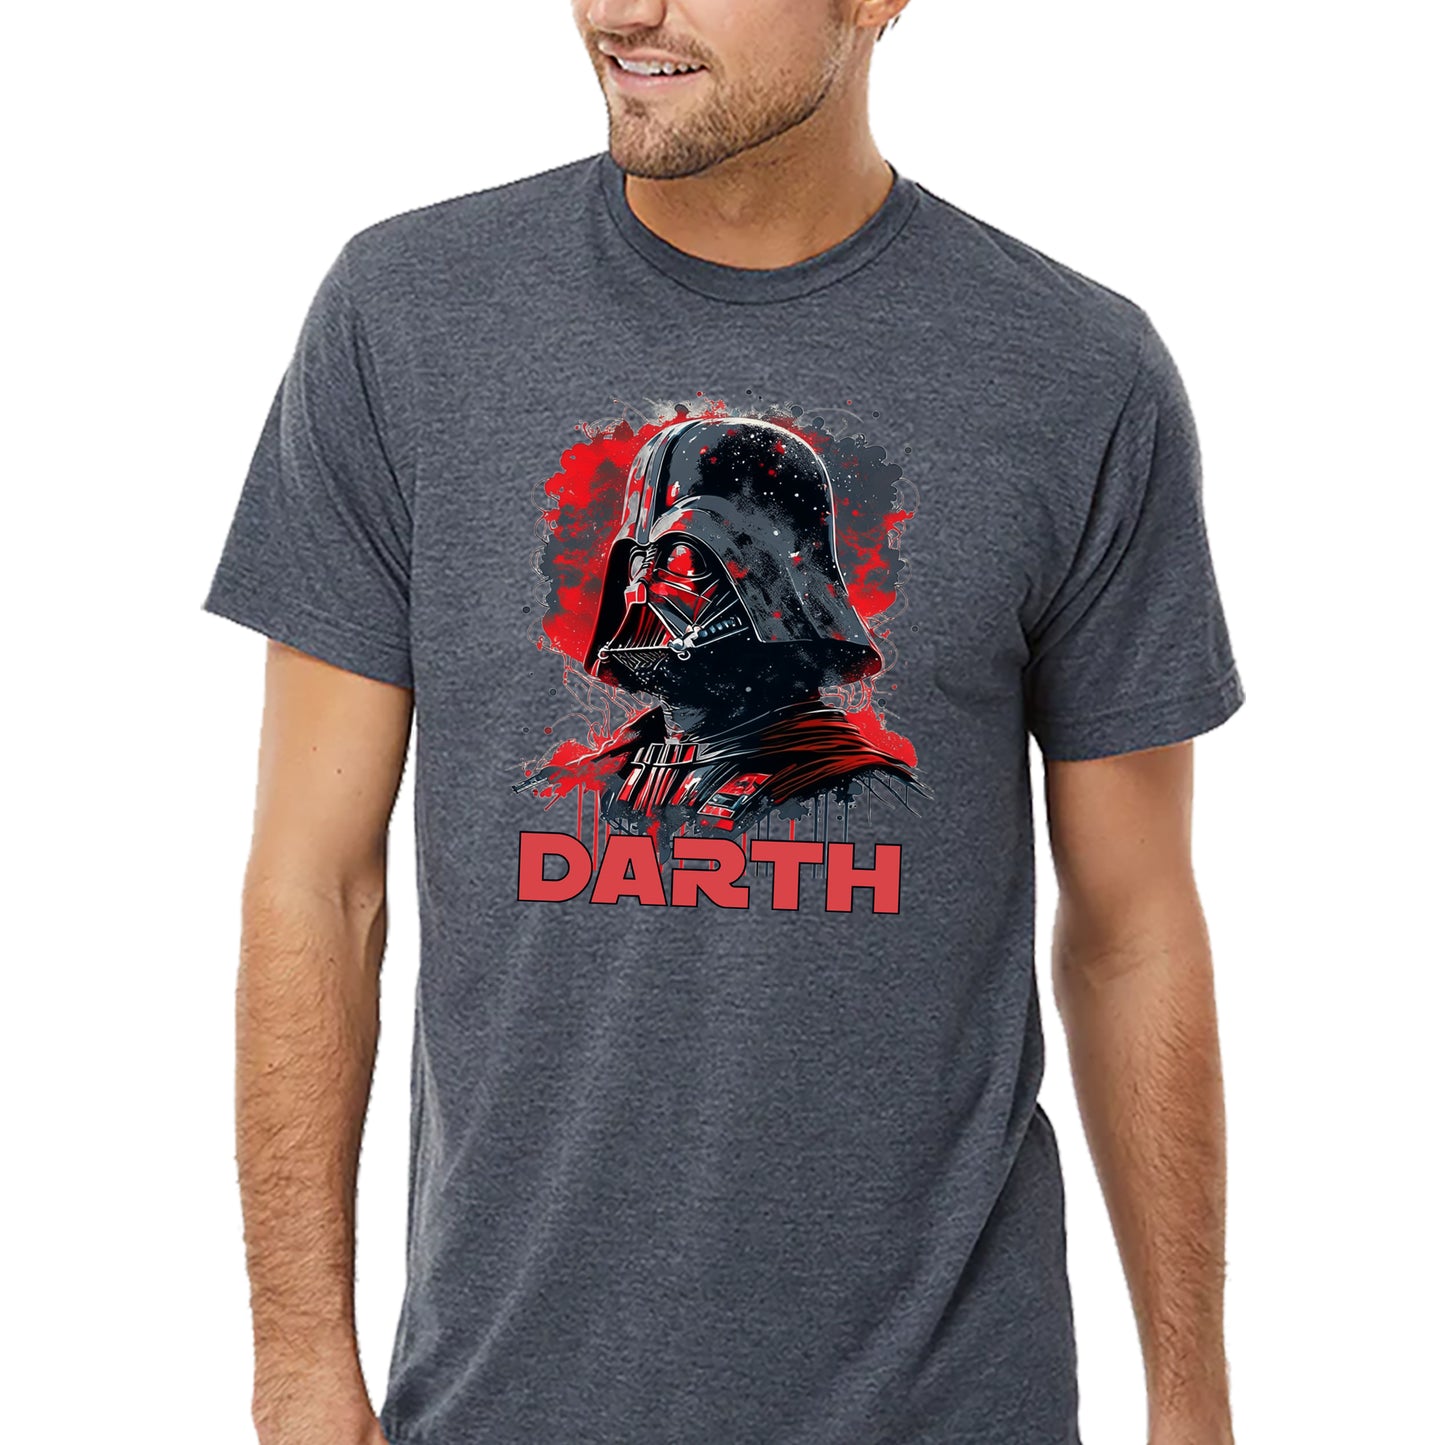 Darth T-shirt